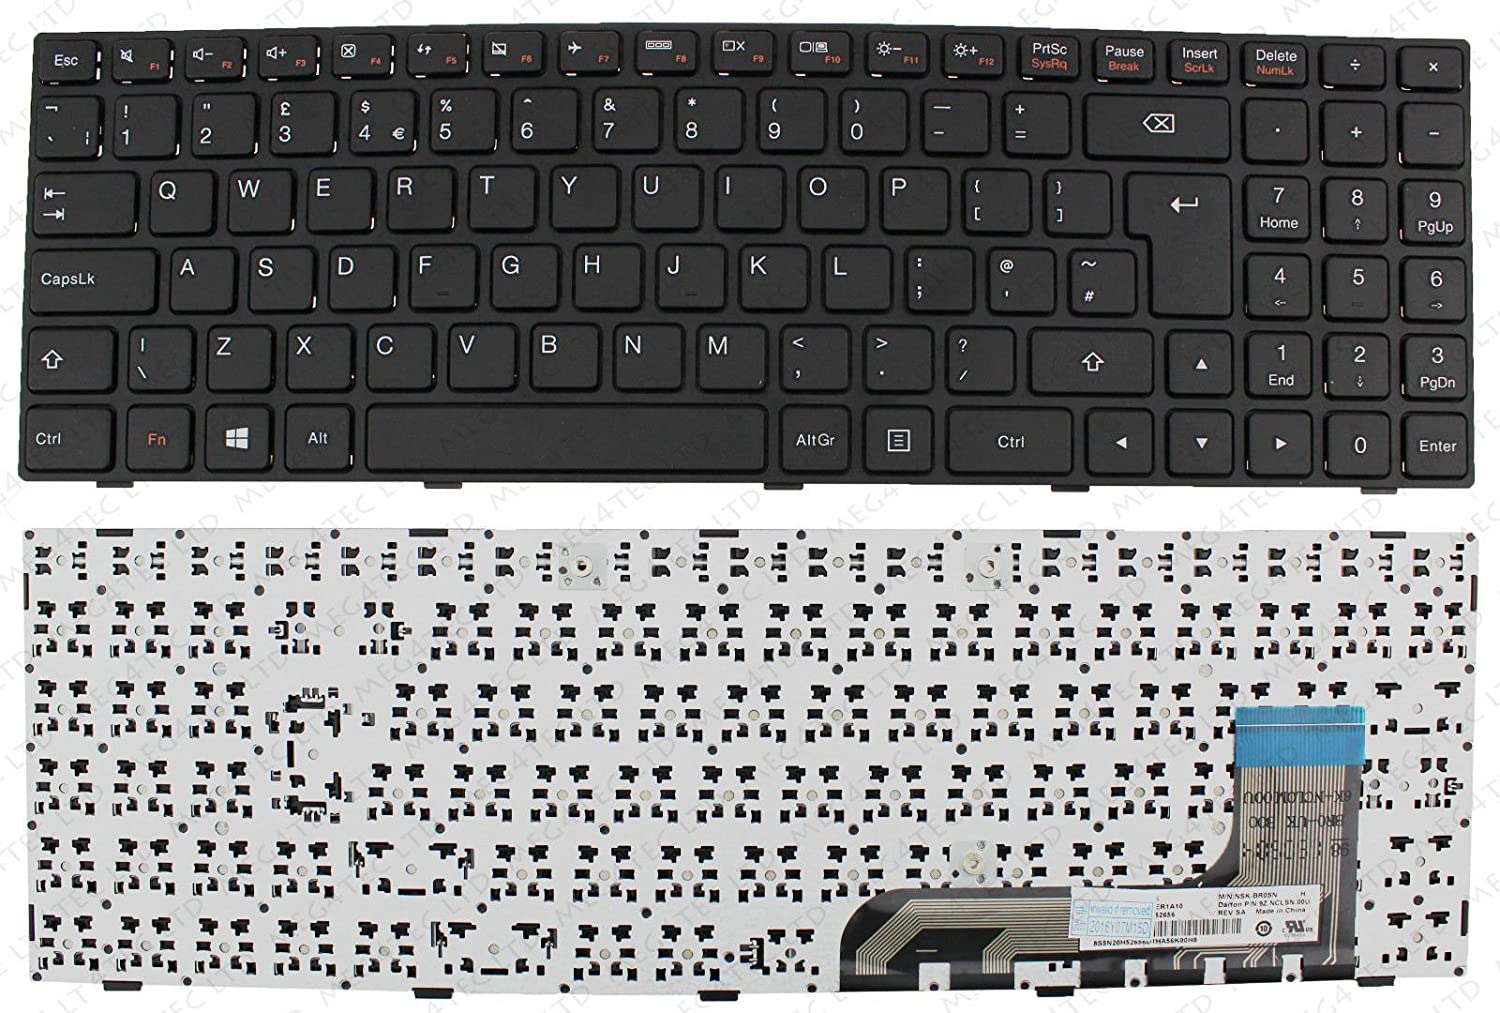 Keyboard Lenovo Ideapad 100